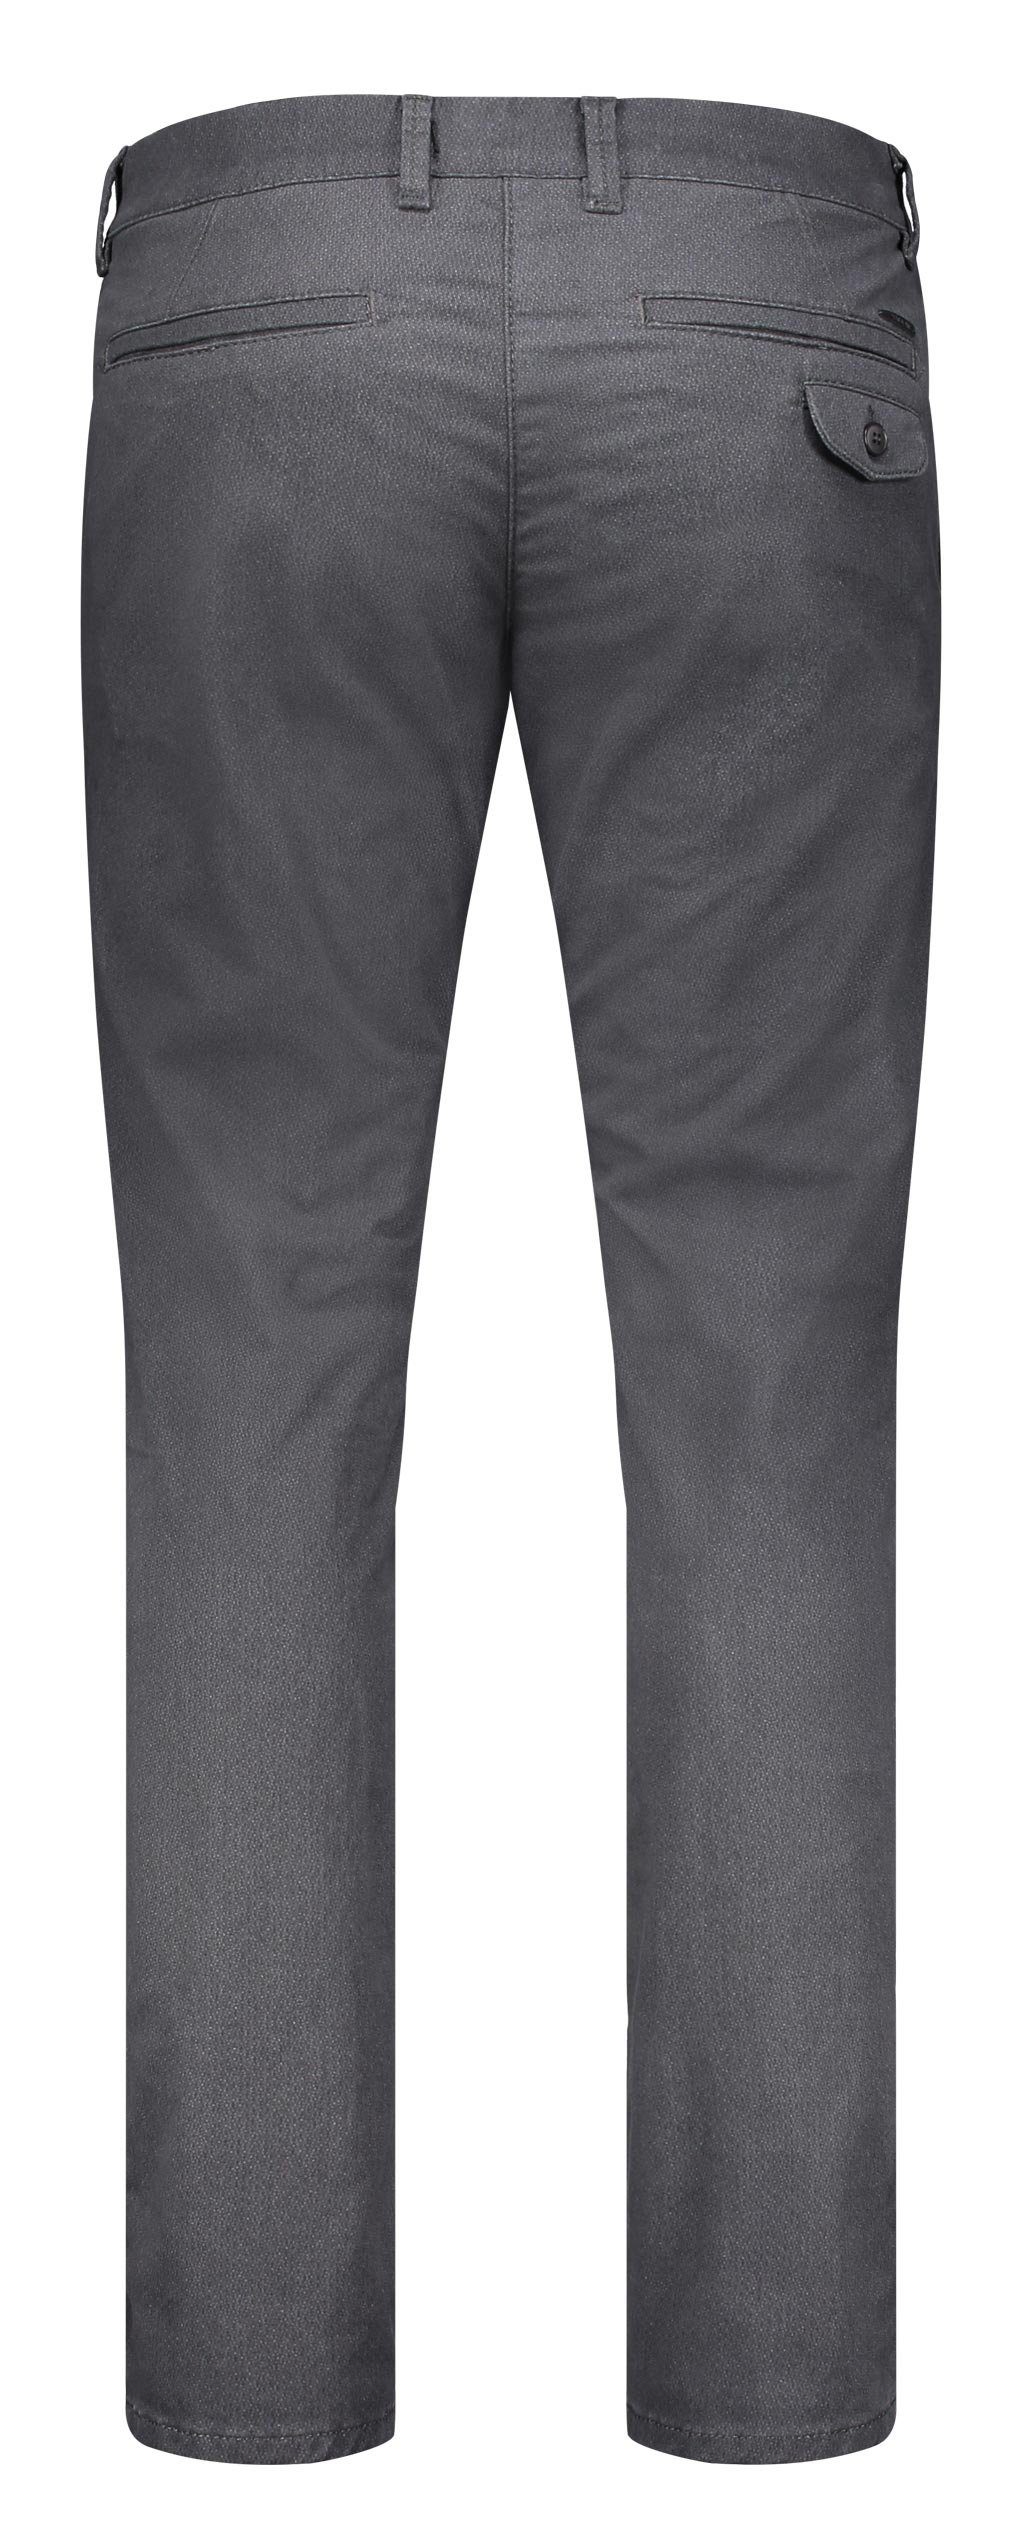 MAC 5-Pocket-Jeans 077 6367-00-0679L stone MAC grey LENNOX